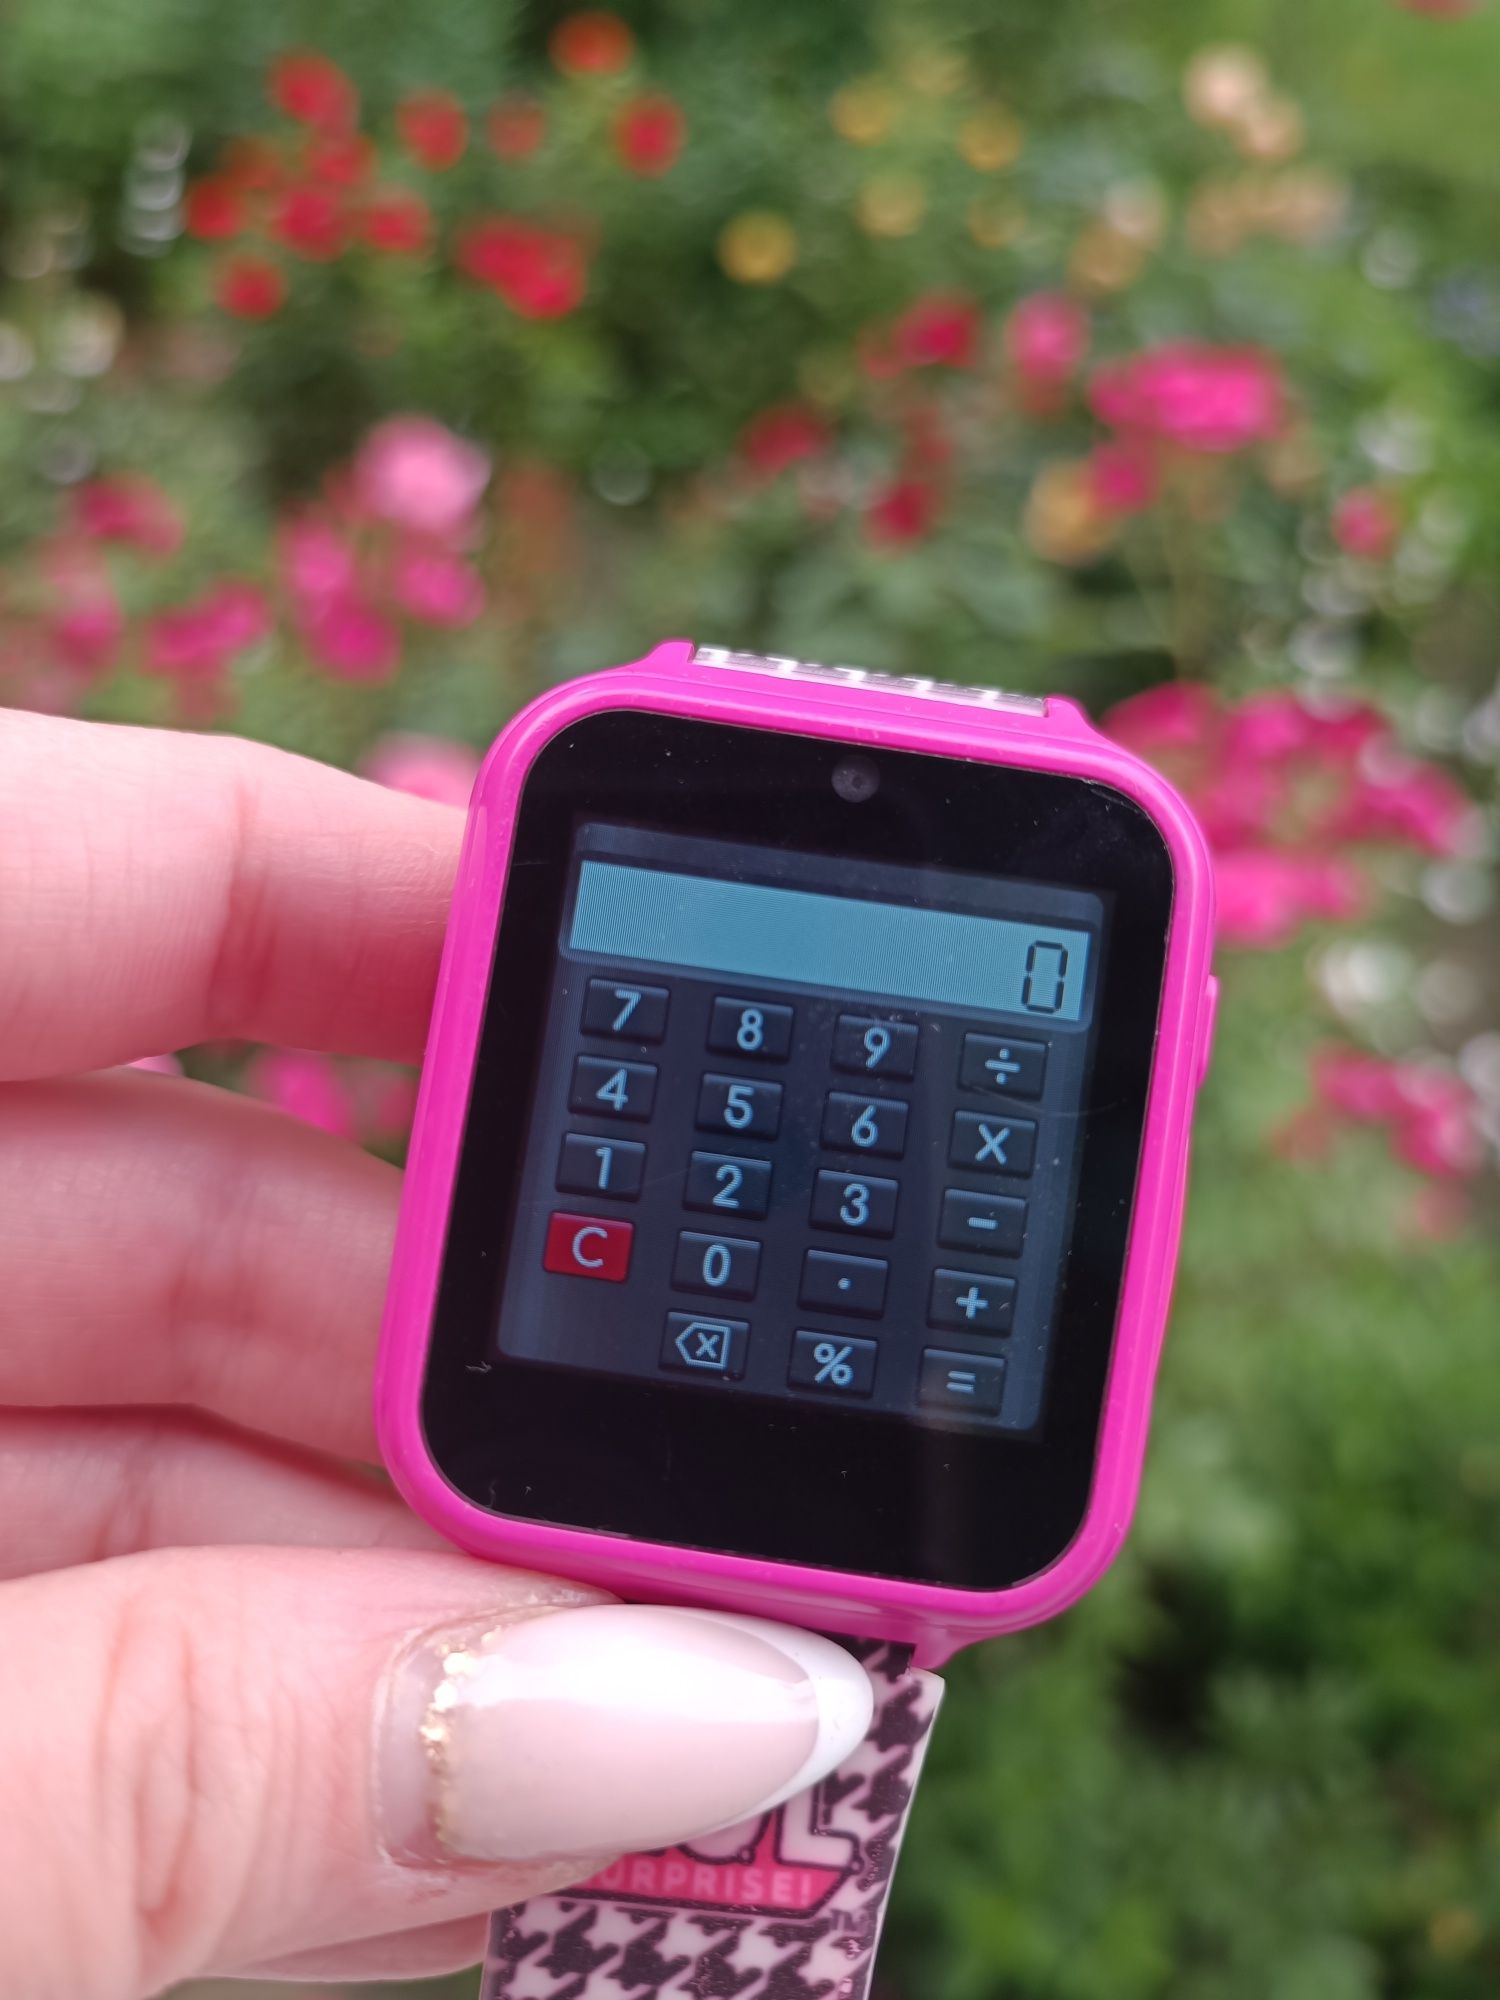 Smartwatch lol LOL suprise zegarek z grami camera kalkulator